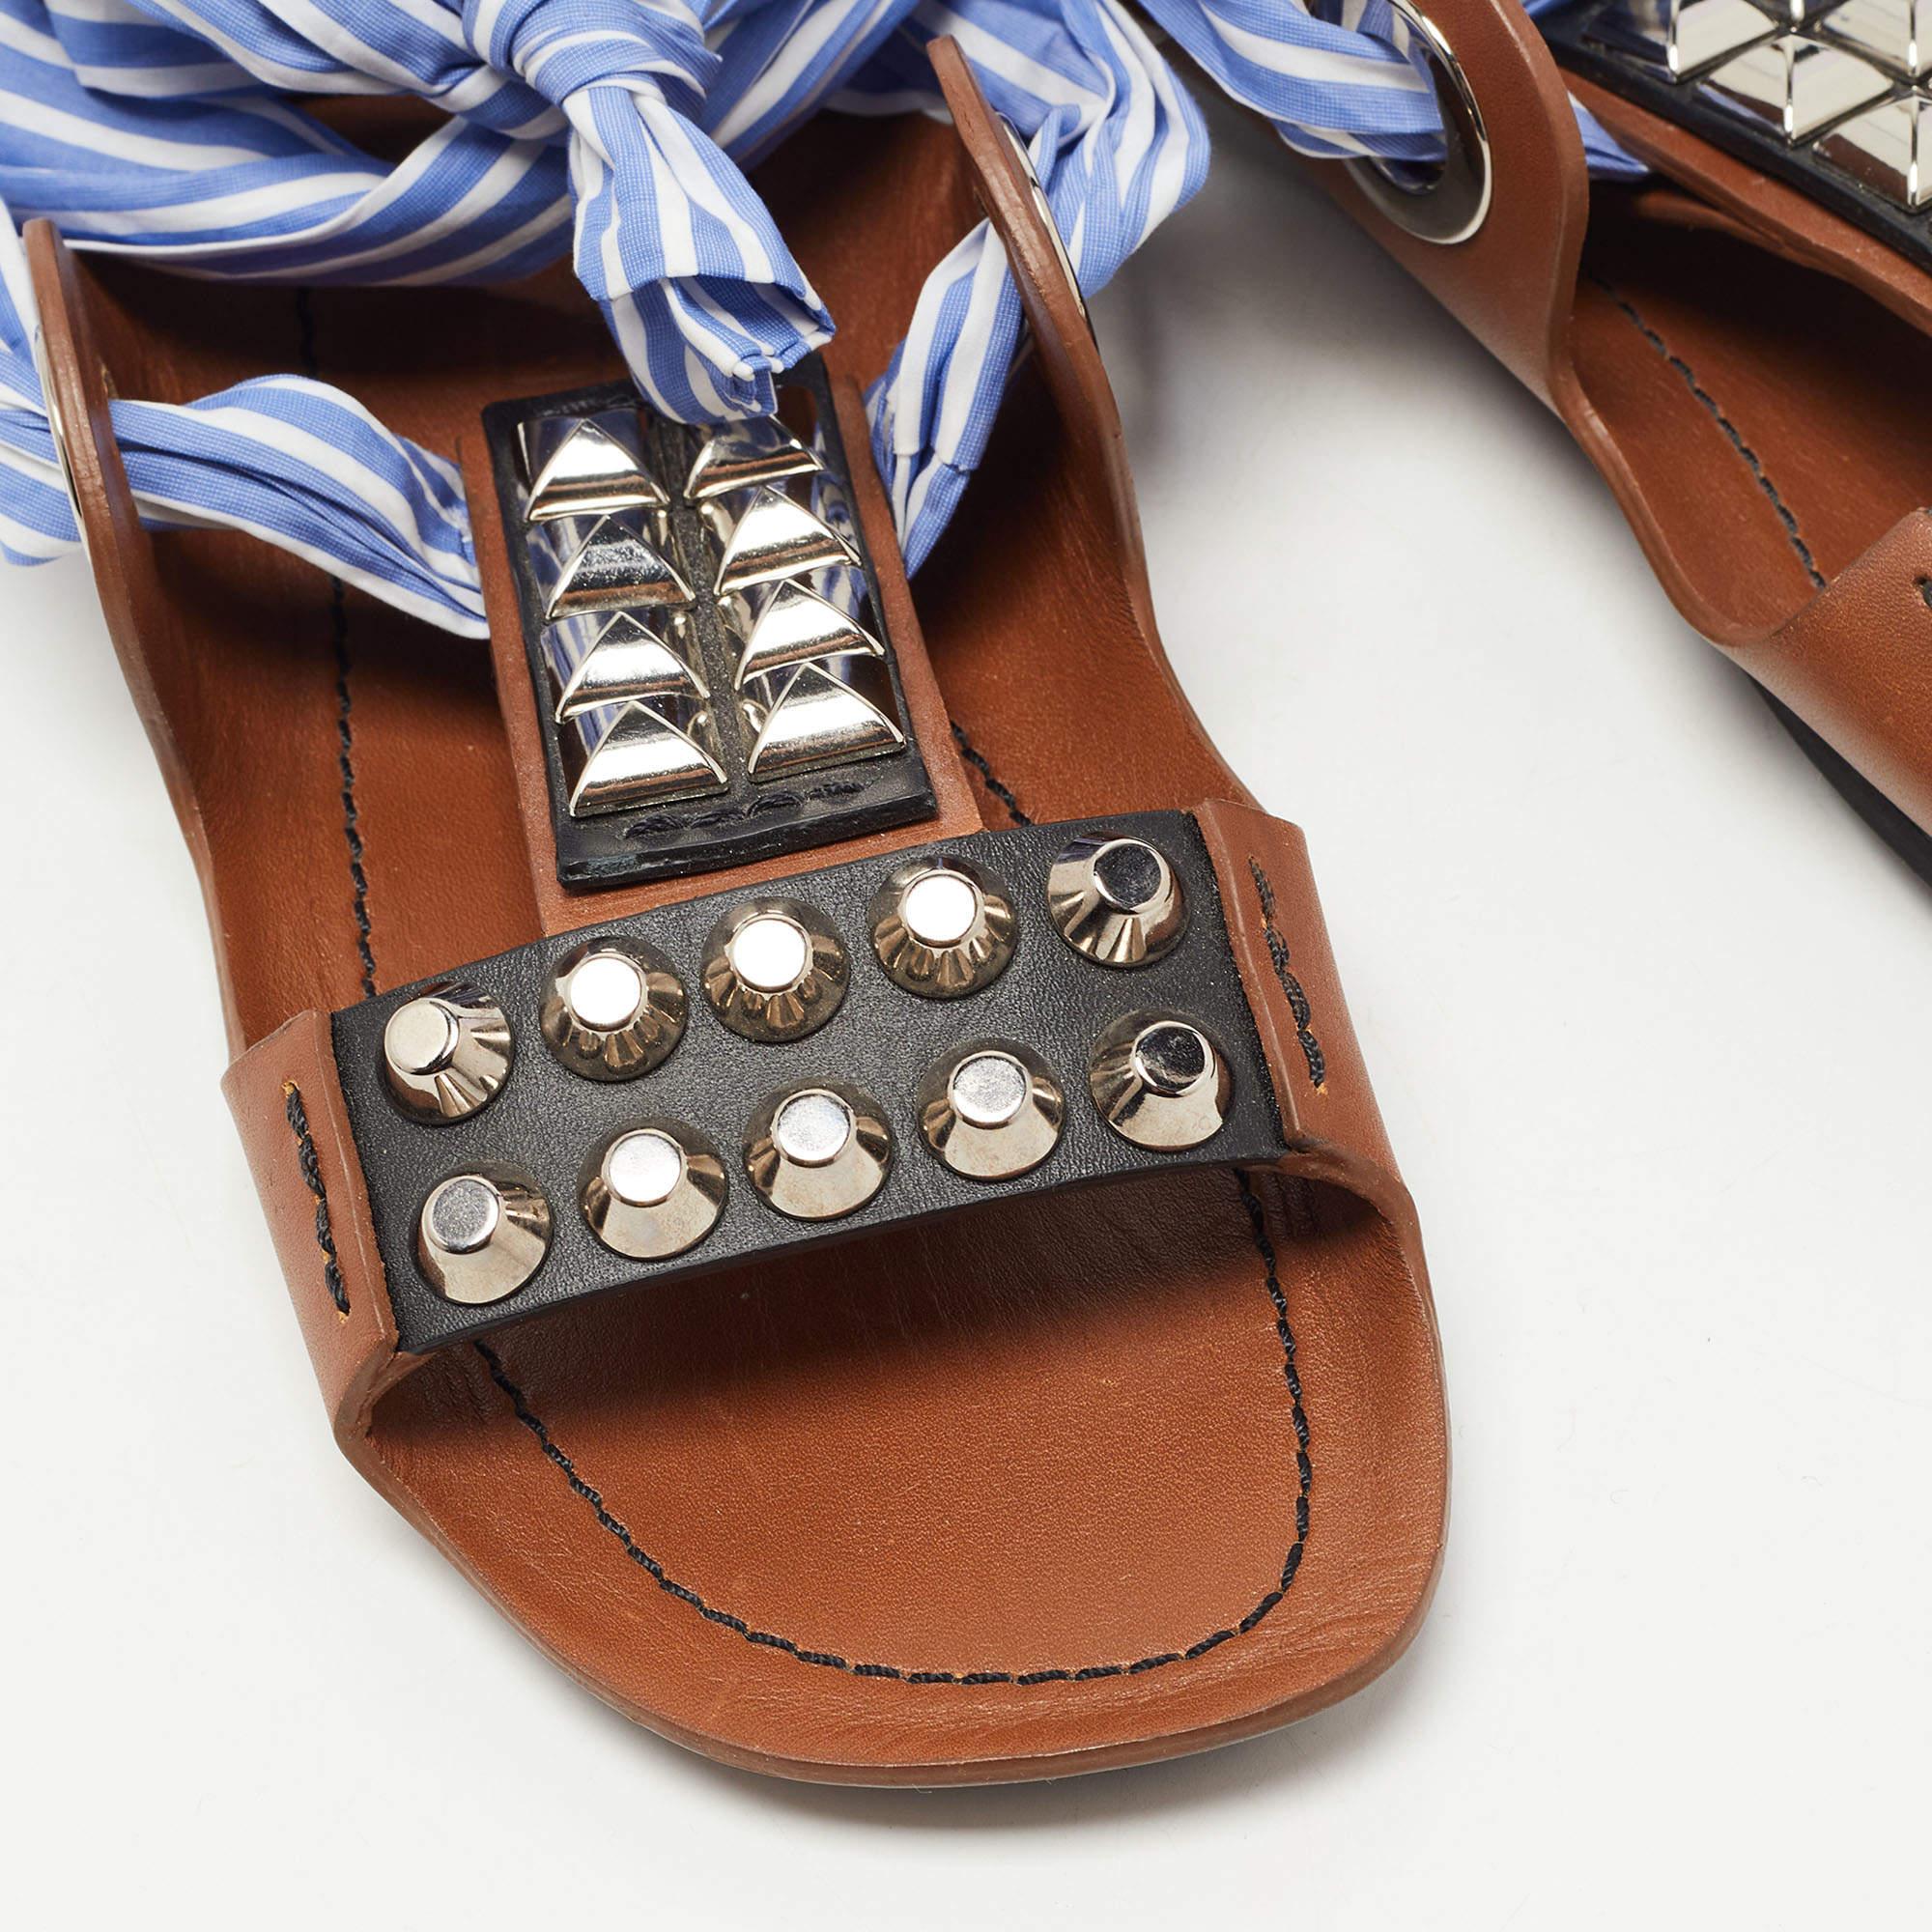 Prada Brown/Blue Leather Studded Ribbon Flat Sandals Size 36 1